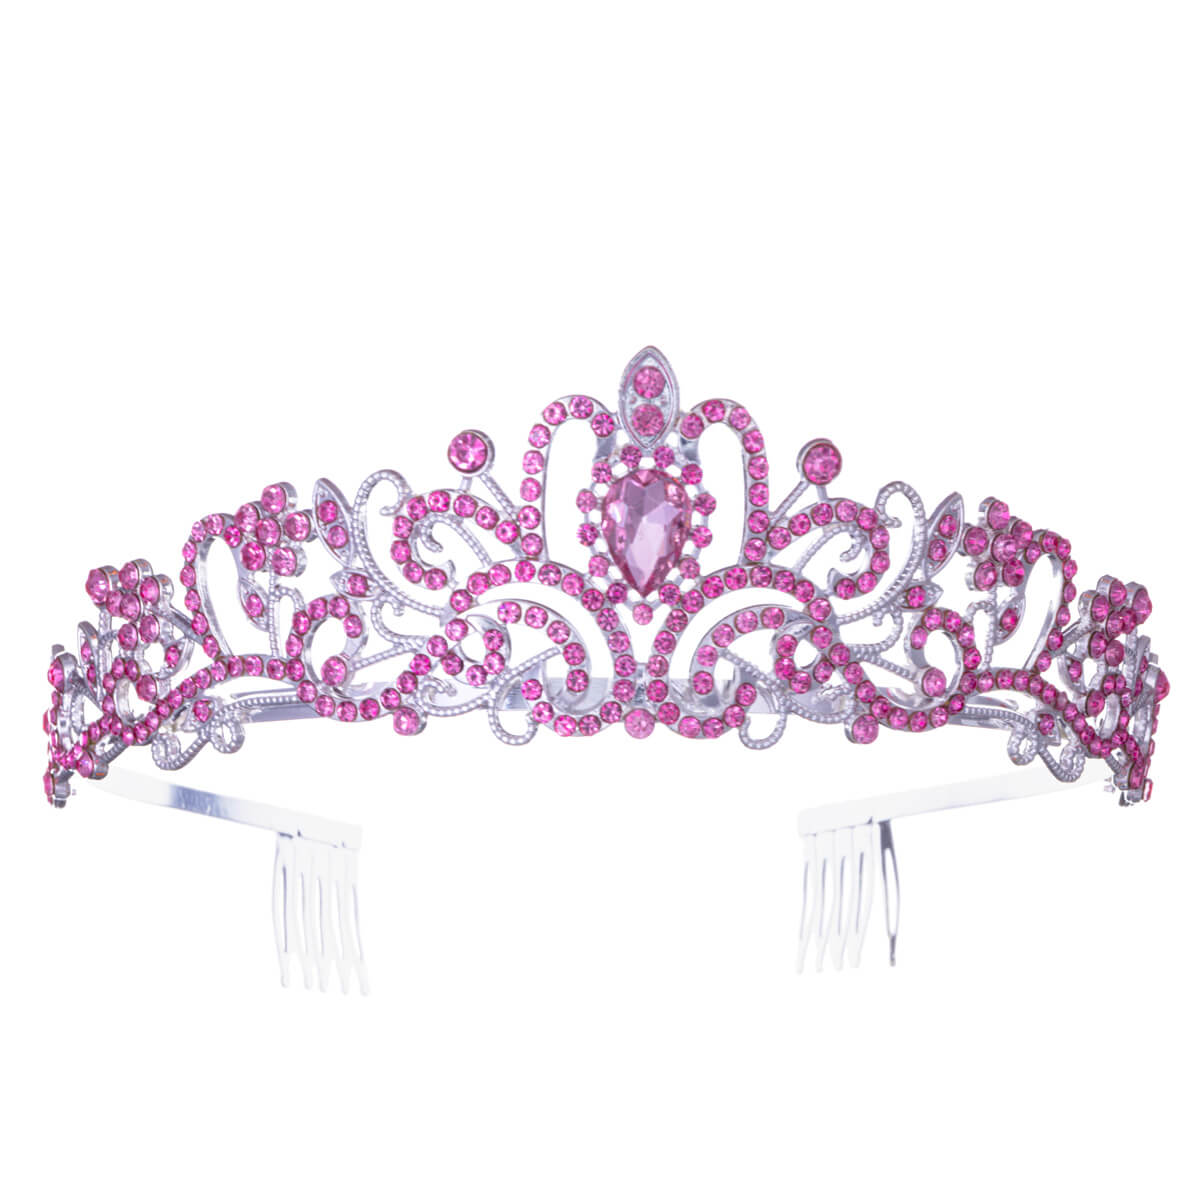 Princess party tiara tiara hairband